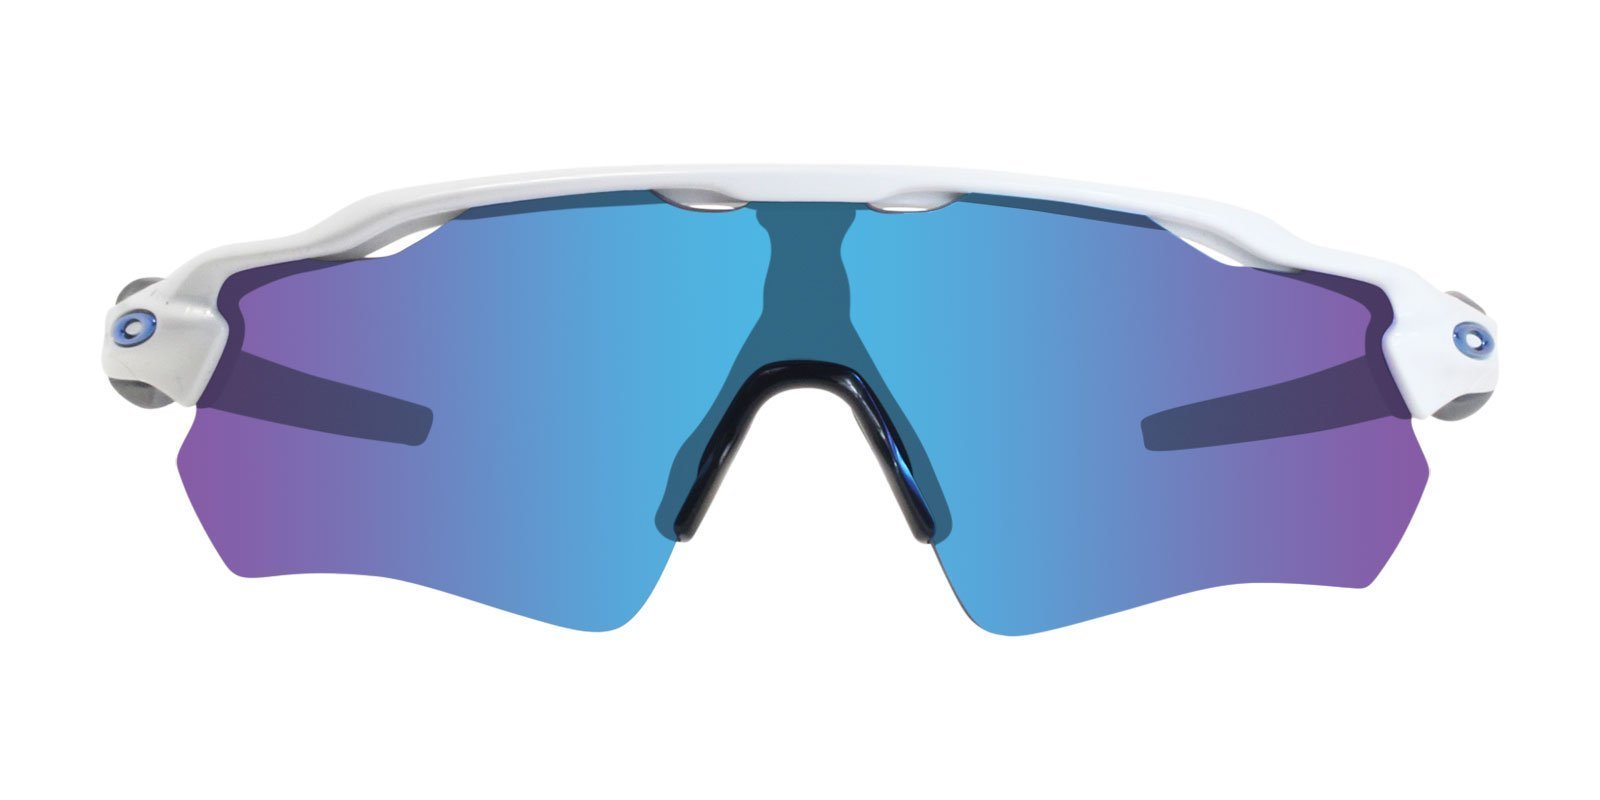 white and blue oakley sunglasses